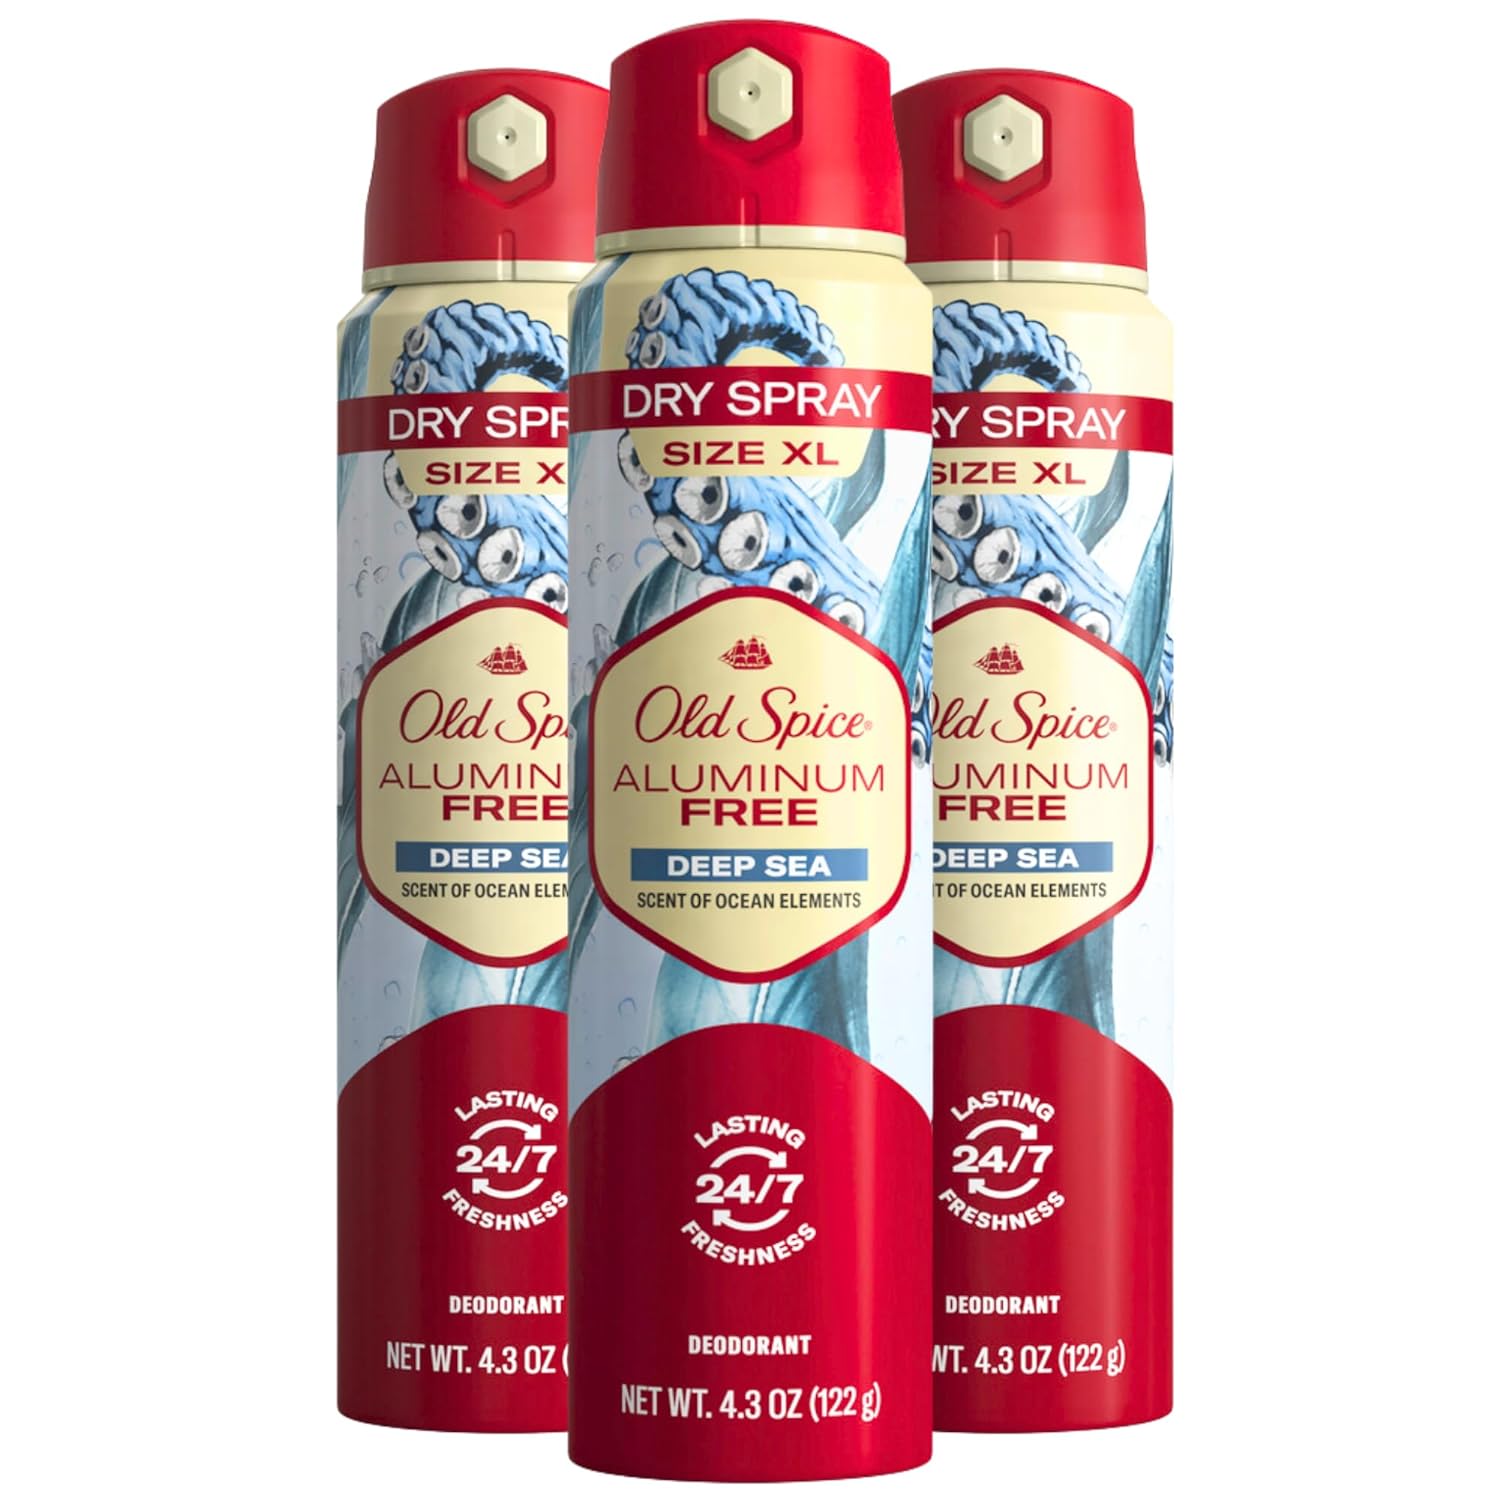 Old Spice Men's Aluminum Free Deodorant Dry Body Spray, Deep Sea, 24/7 Odor Protection, 4.3oz (Pack of 3)